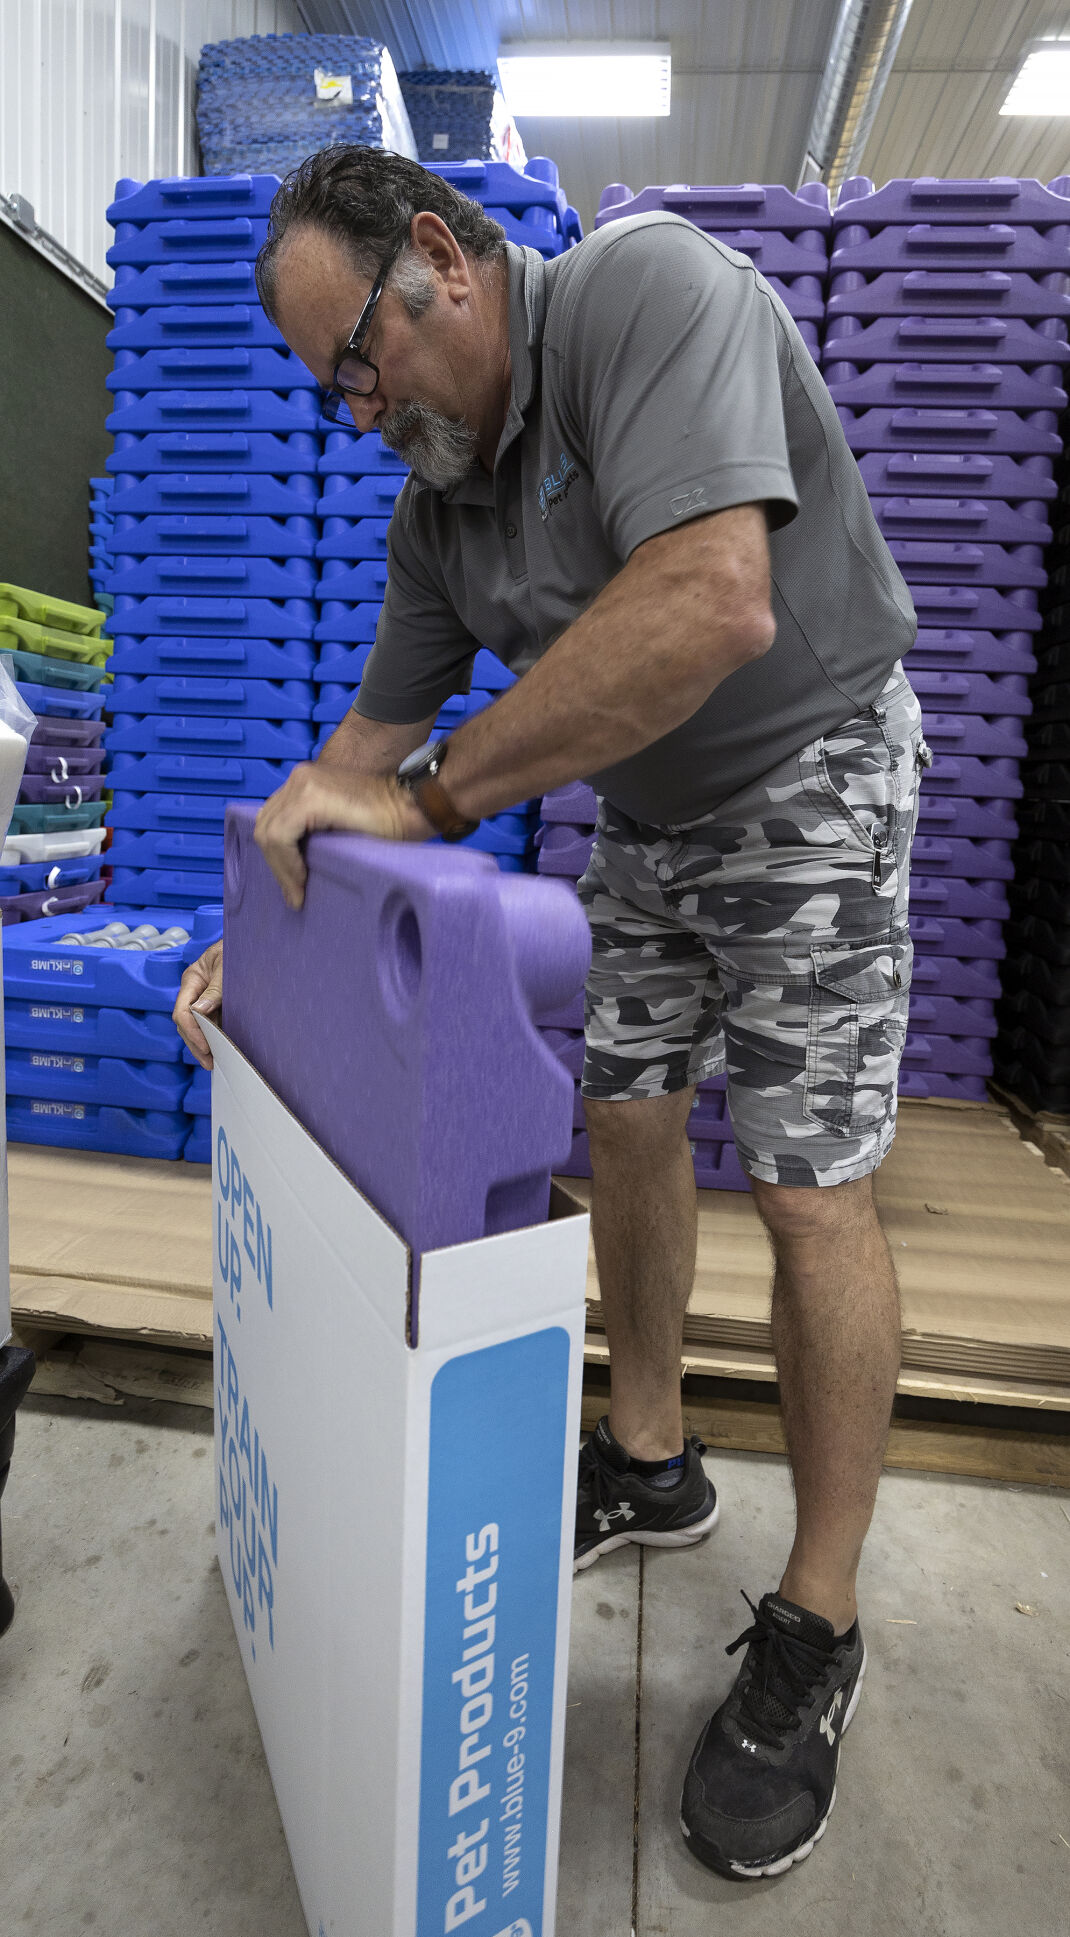 Blue-9 employee Tim Taylor loads a Klimb dog training platform into a box at the company’s warehouse.    PHOTO CREDIT: Stephen Gassman
Telegraph Herald